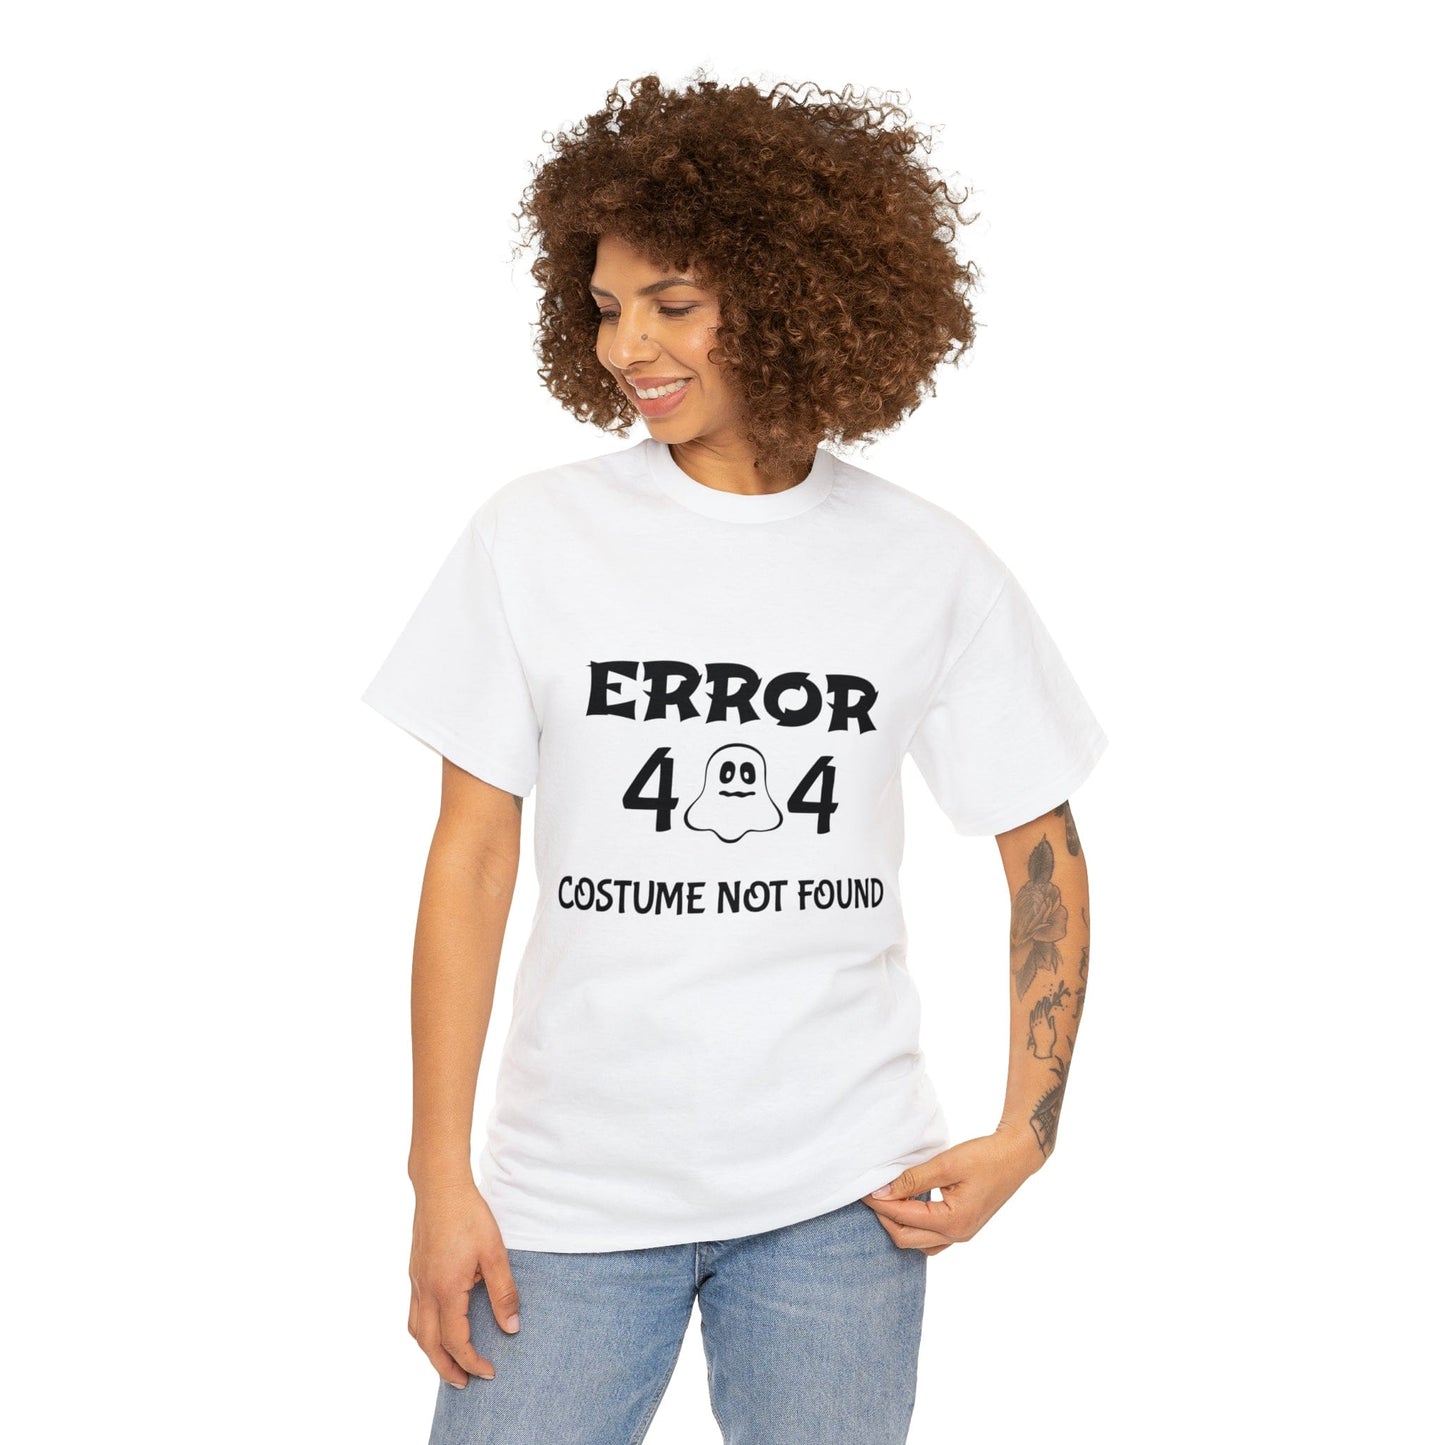 ERROR 404 Costume Not Found - White